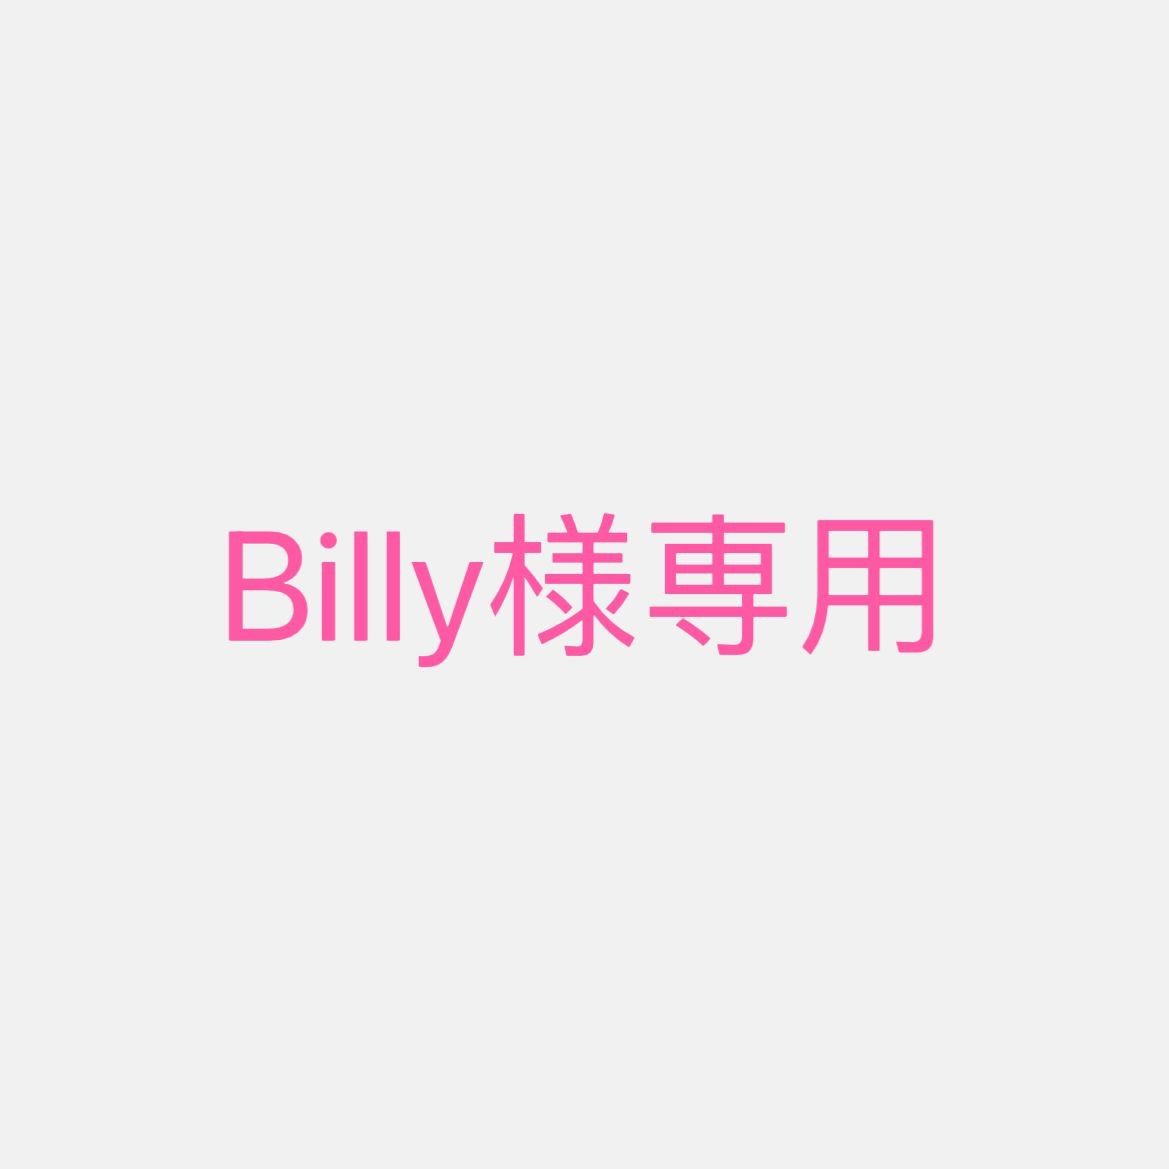 Billy 様専用 - ラッキーショップ - メルカリ